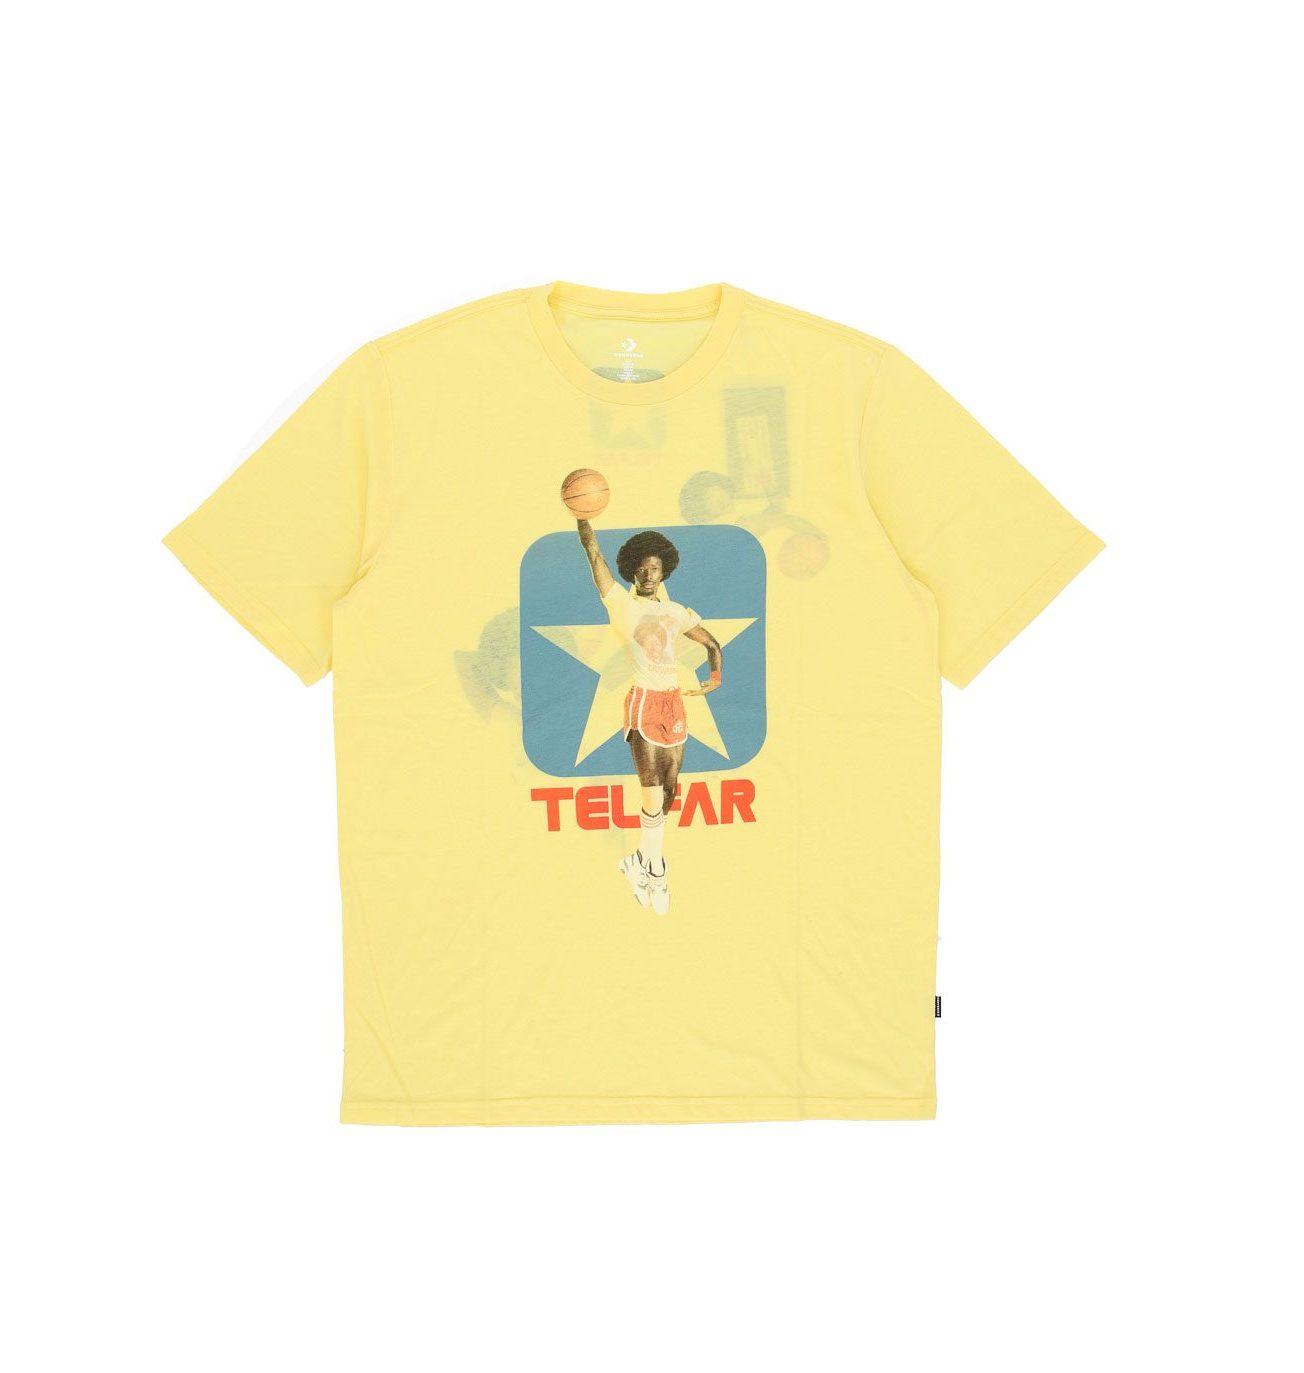 yellow converse t shirt